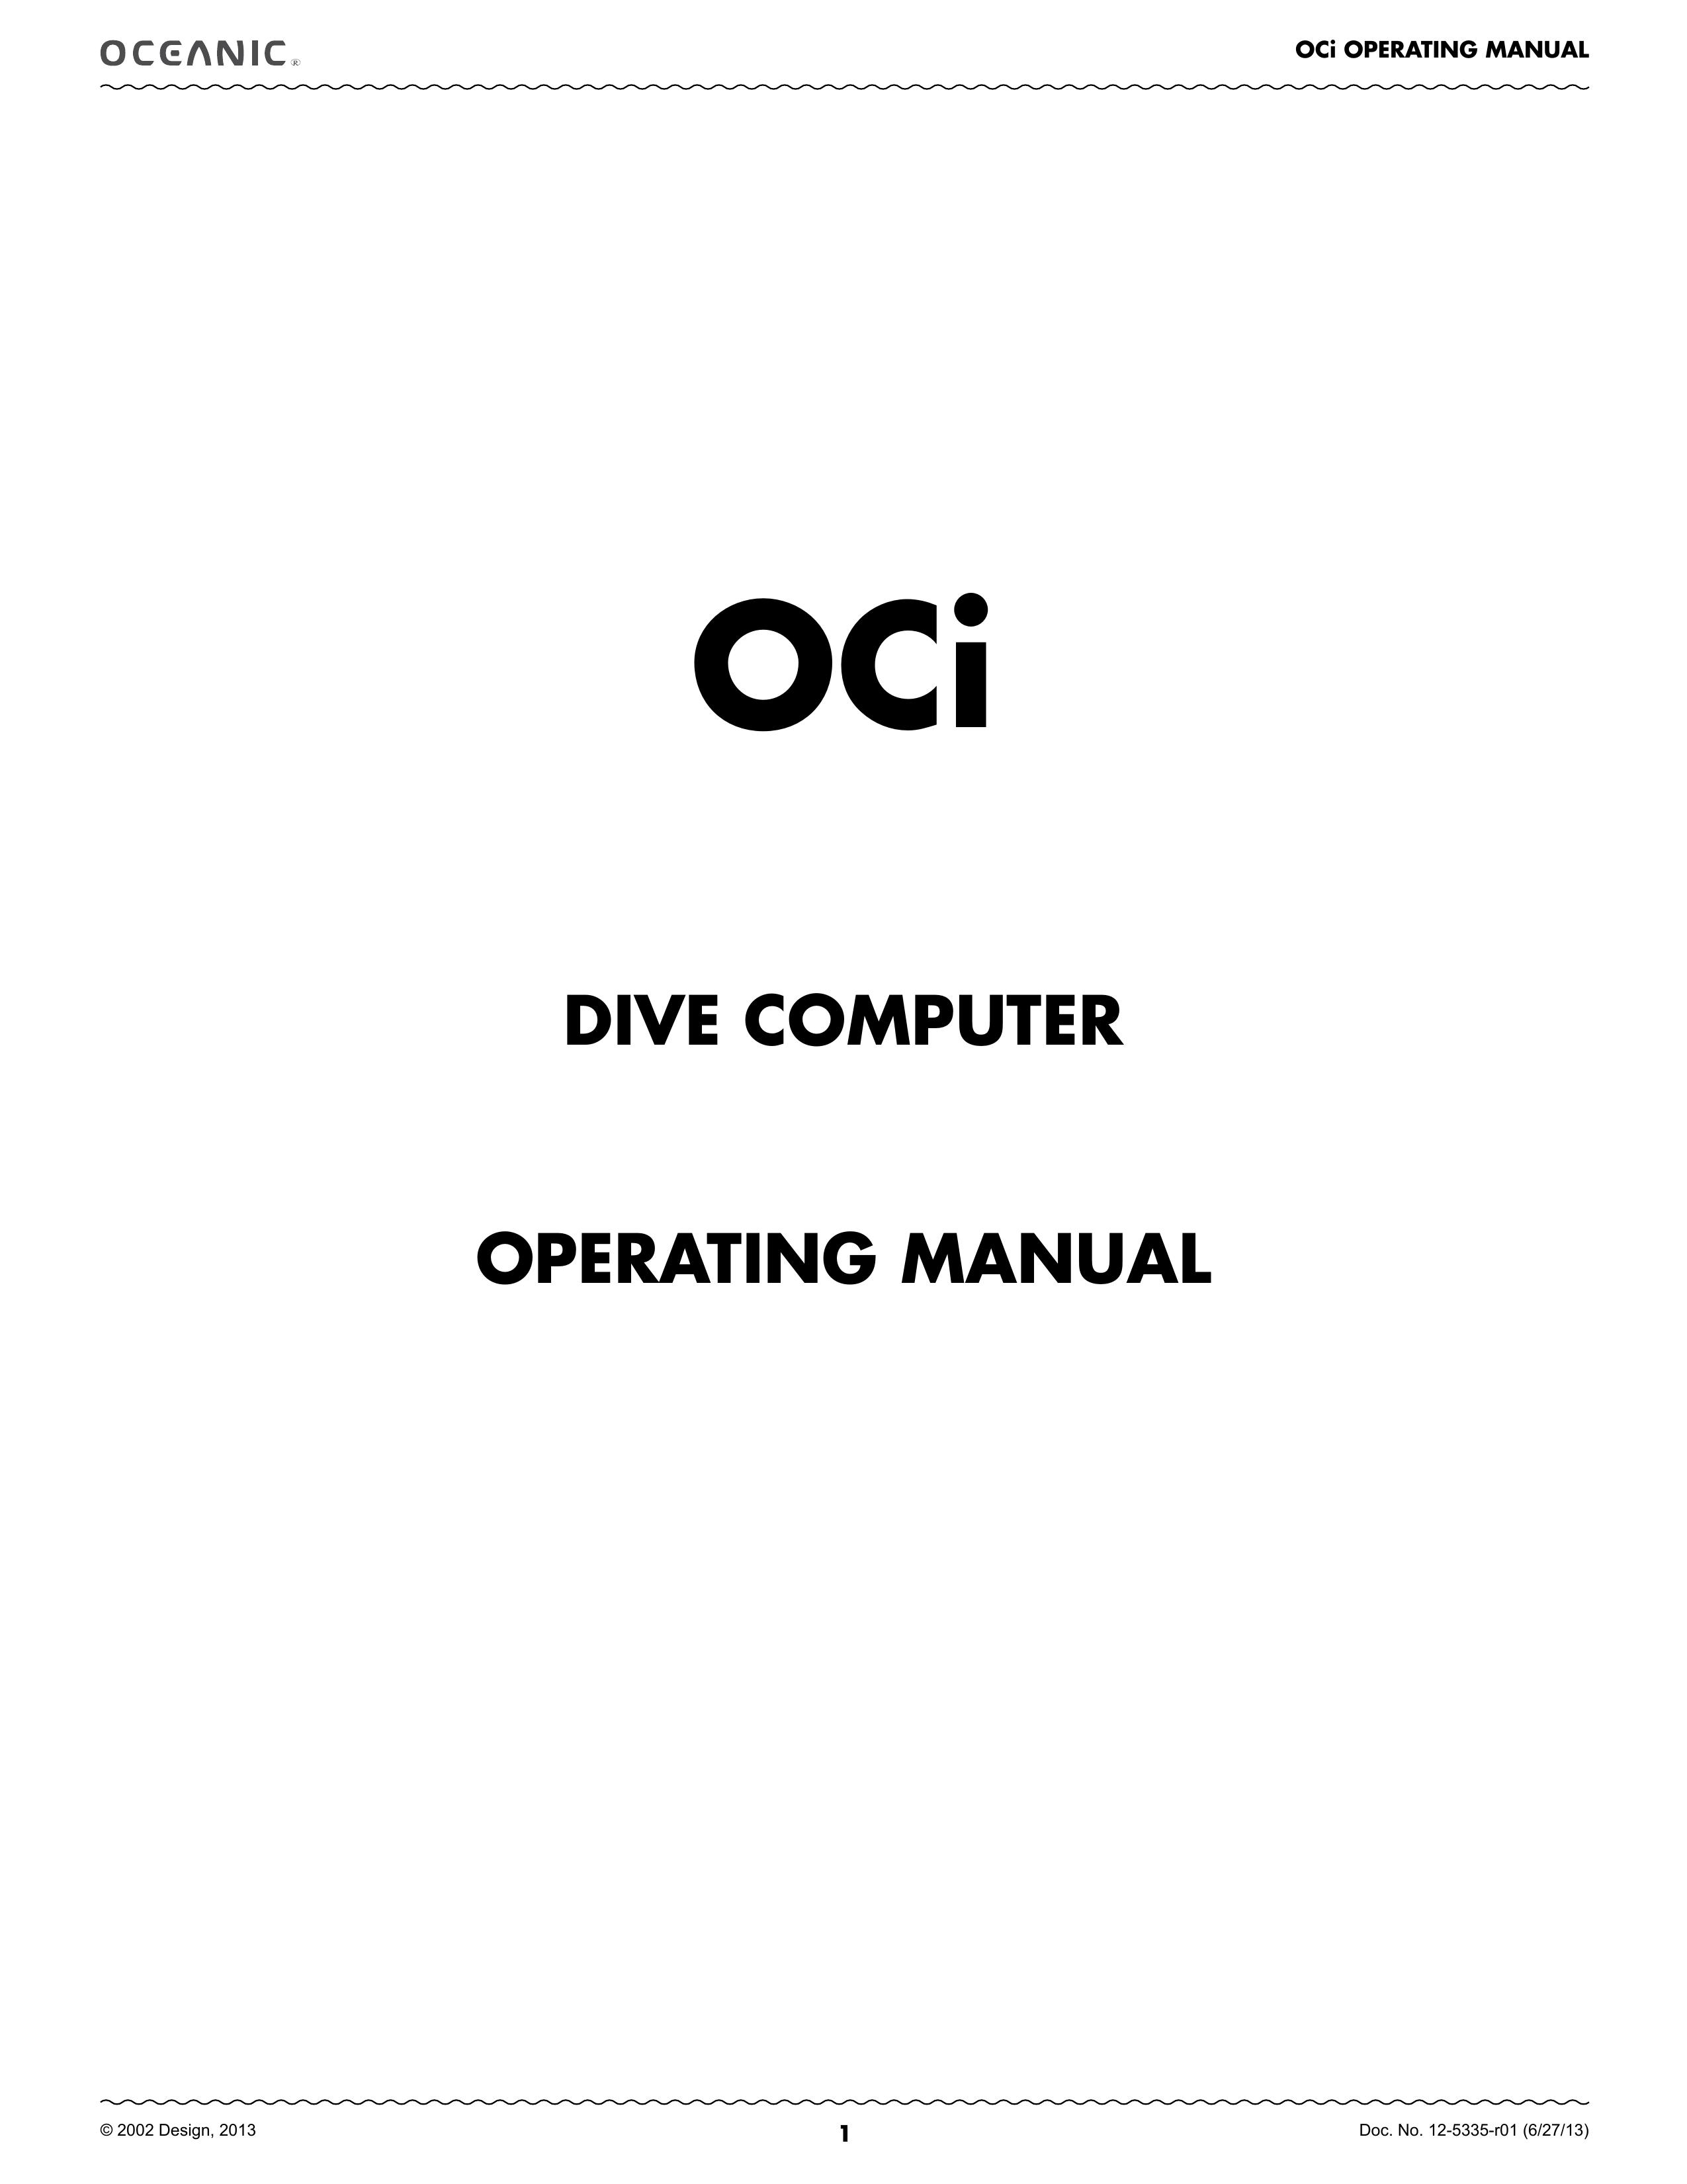 Oceanic 04-8791-29 Scuba Diving Equipment User Manual